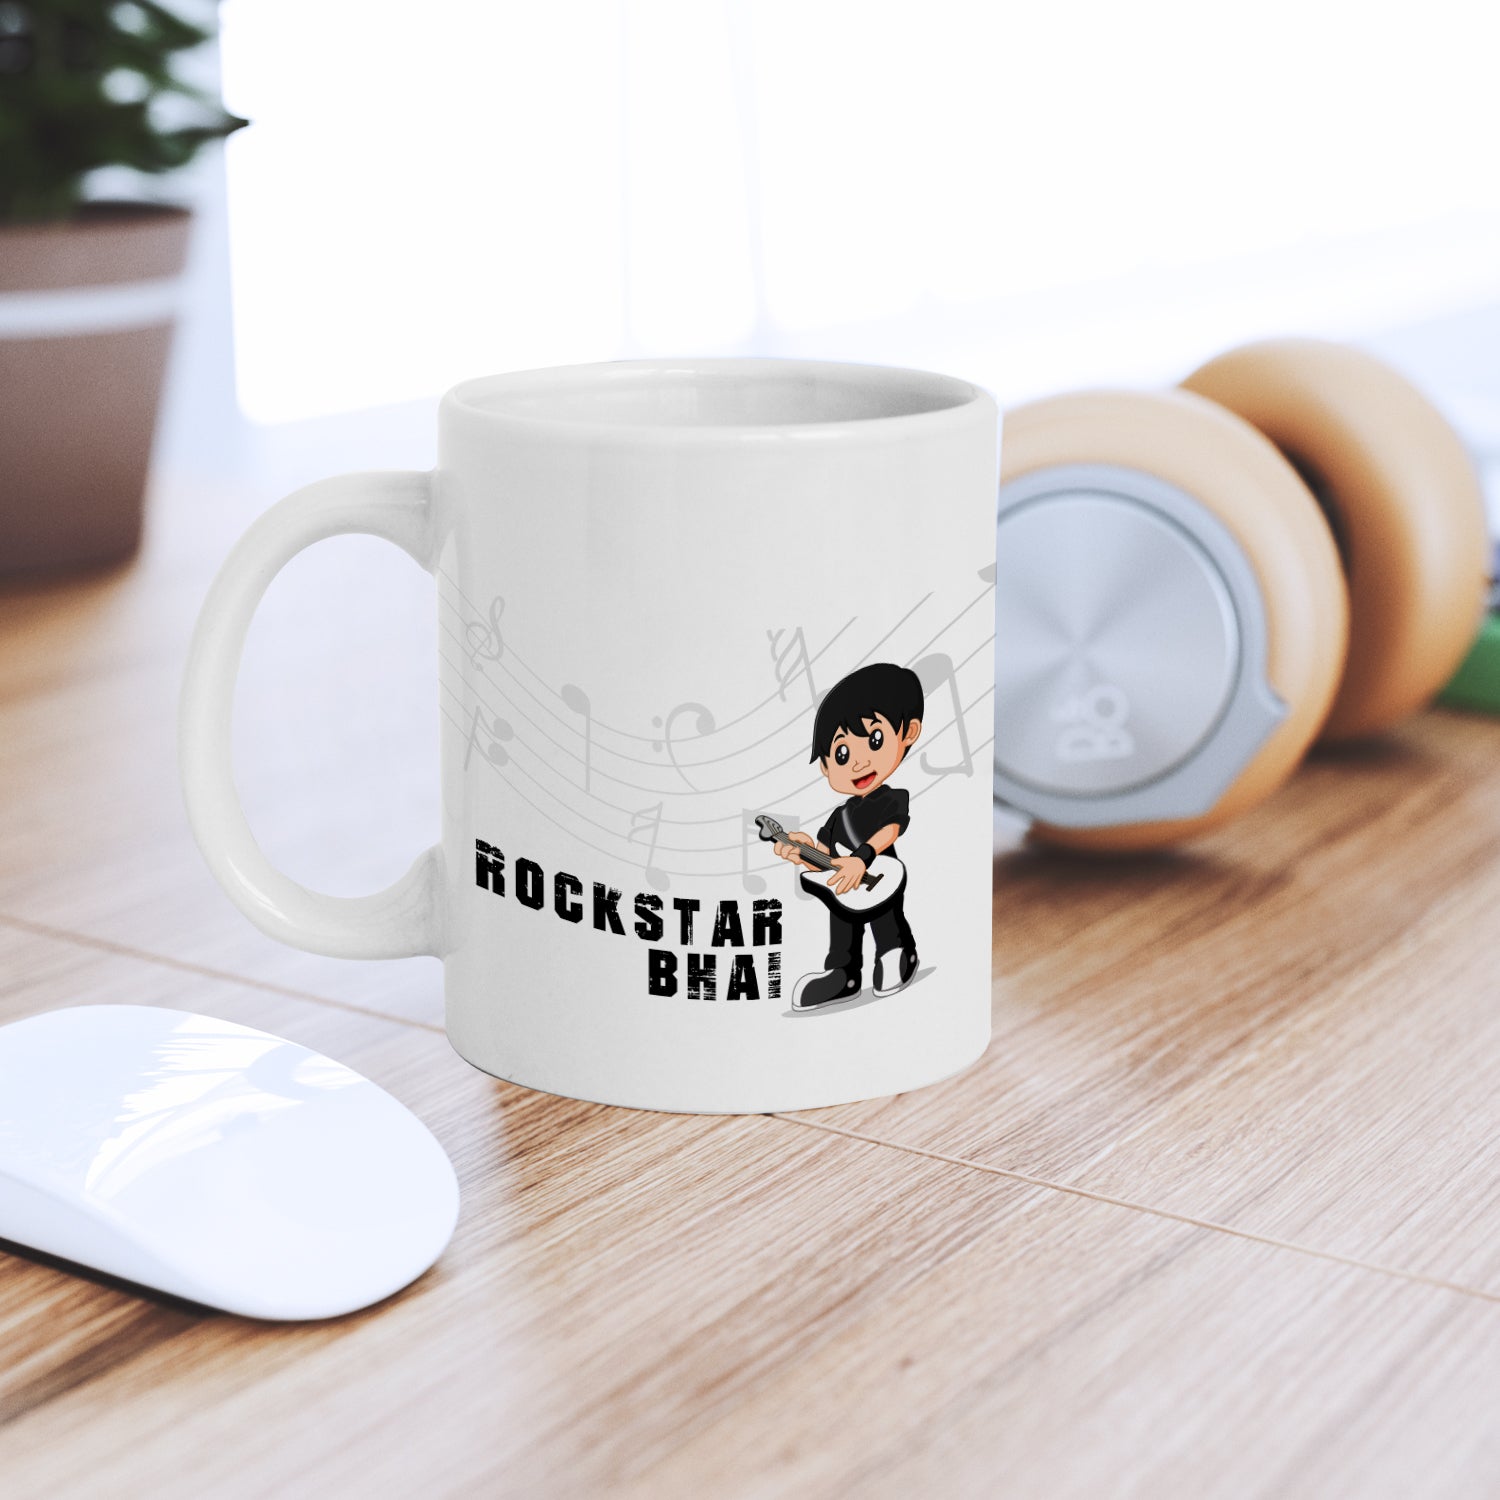 "Rockstar Bhai" Brother Ceramic Coffee/Tea Mug